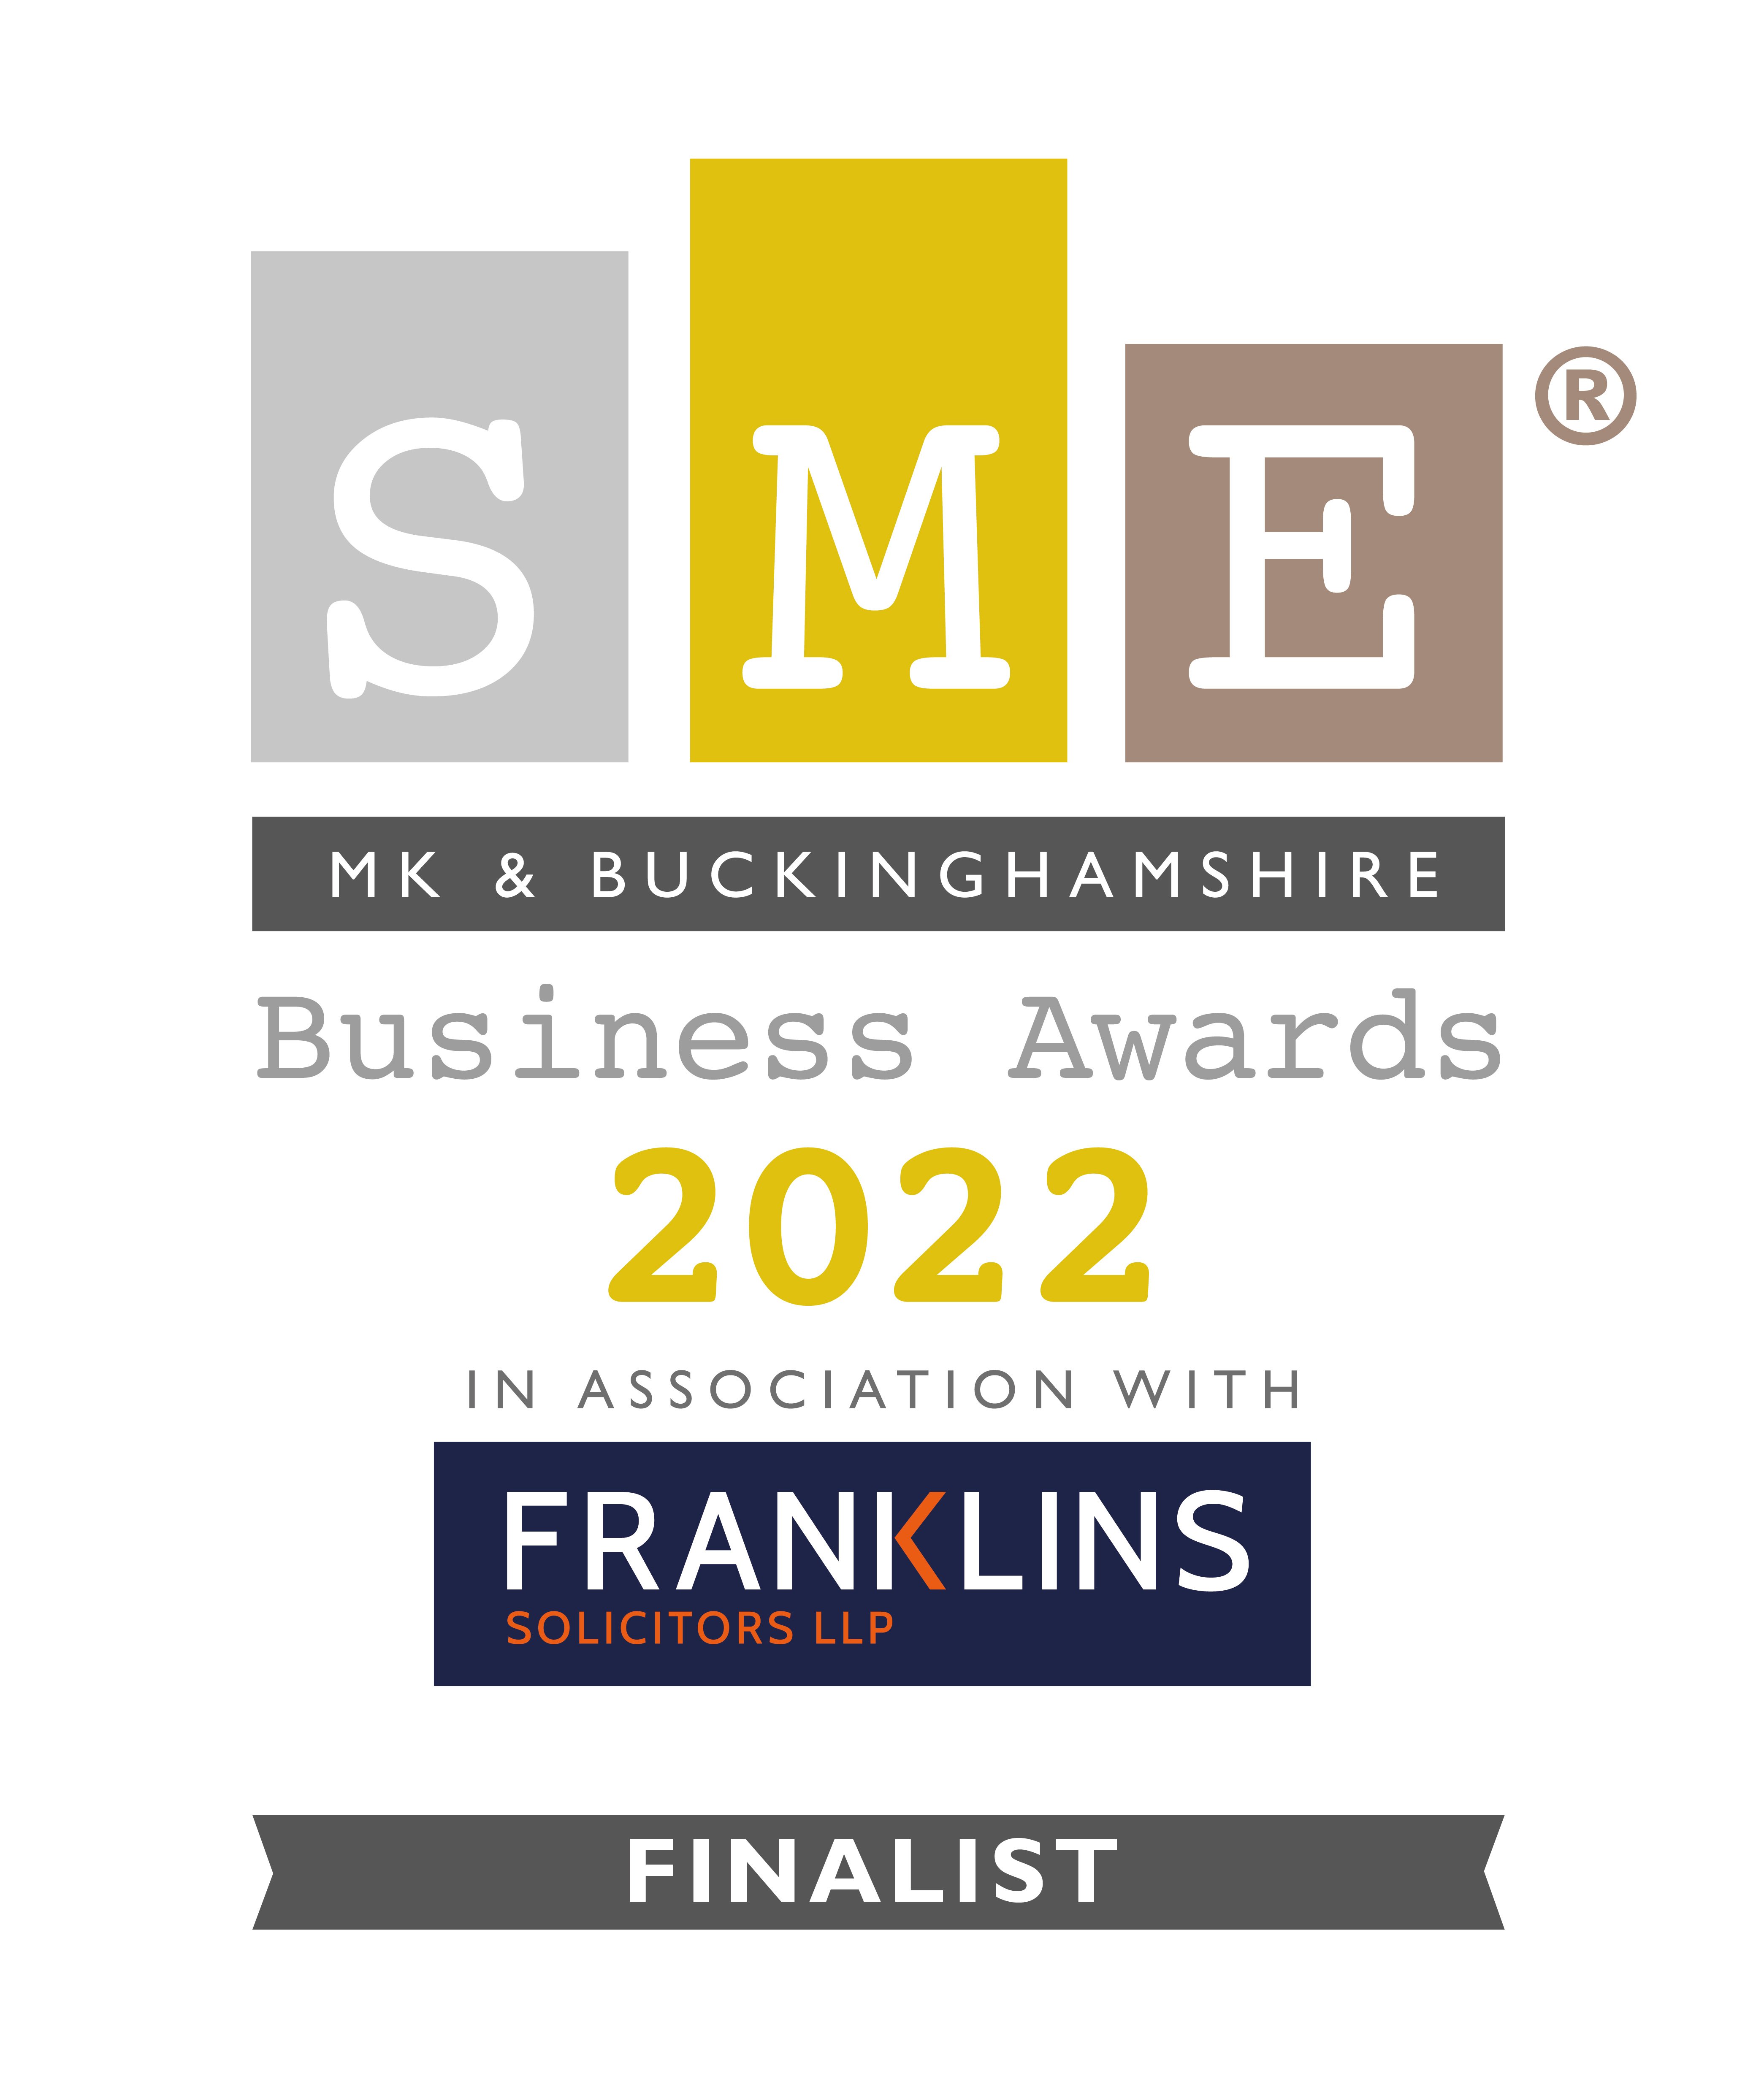 SME mk & buckinghamshire business awards finalist poster